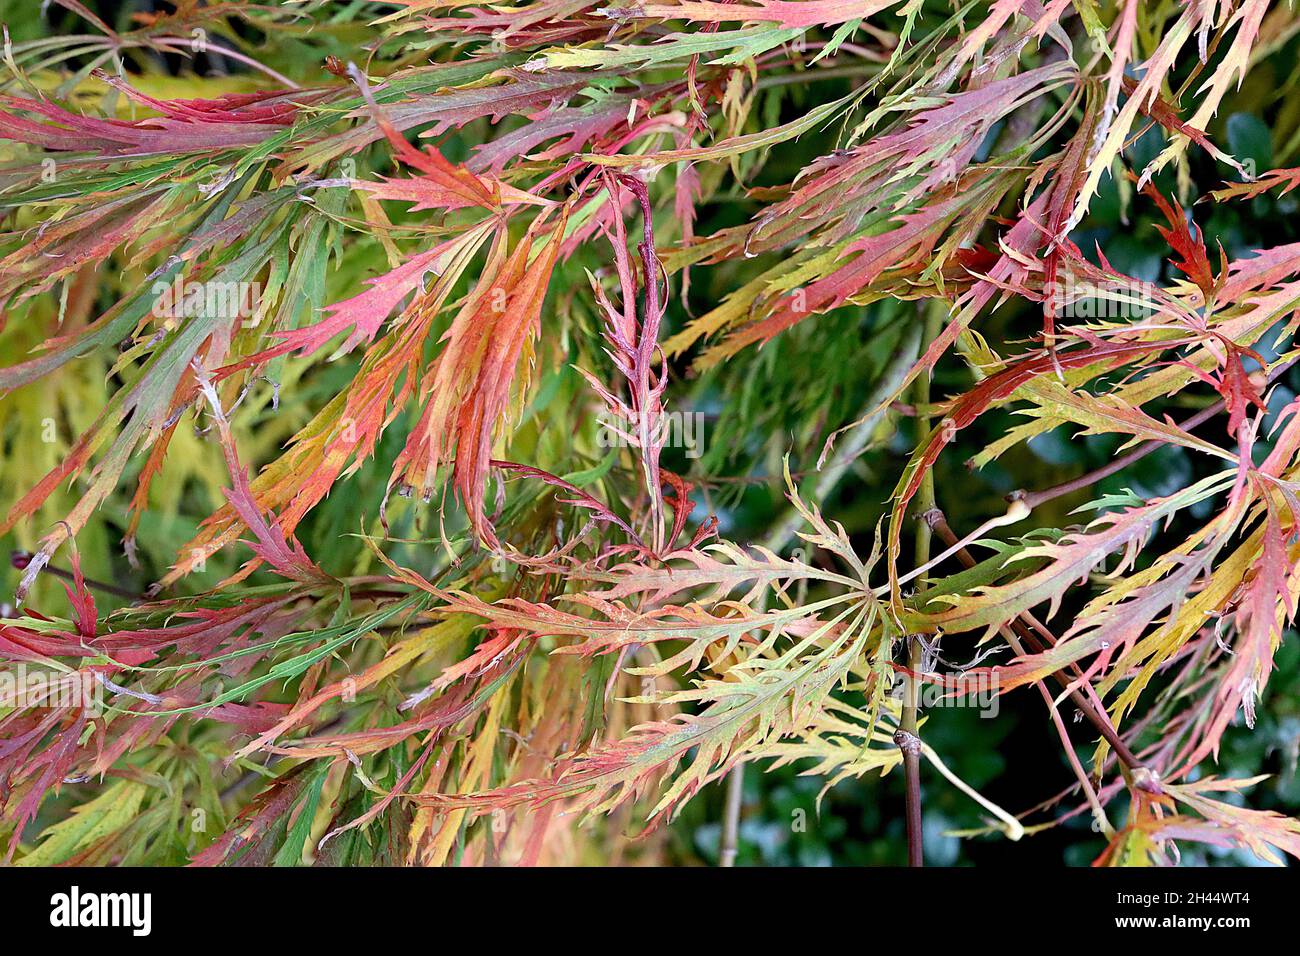 Acer palmatum dissectum ‘Atropurpureum’ Japanese cutleaf maple Atropurpureum – yellow, orange, red, green and burgundy lacelike leaves,  October, UK Stock Photo